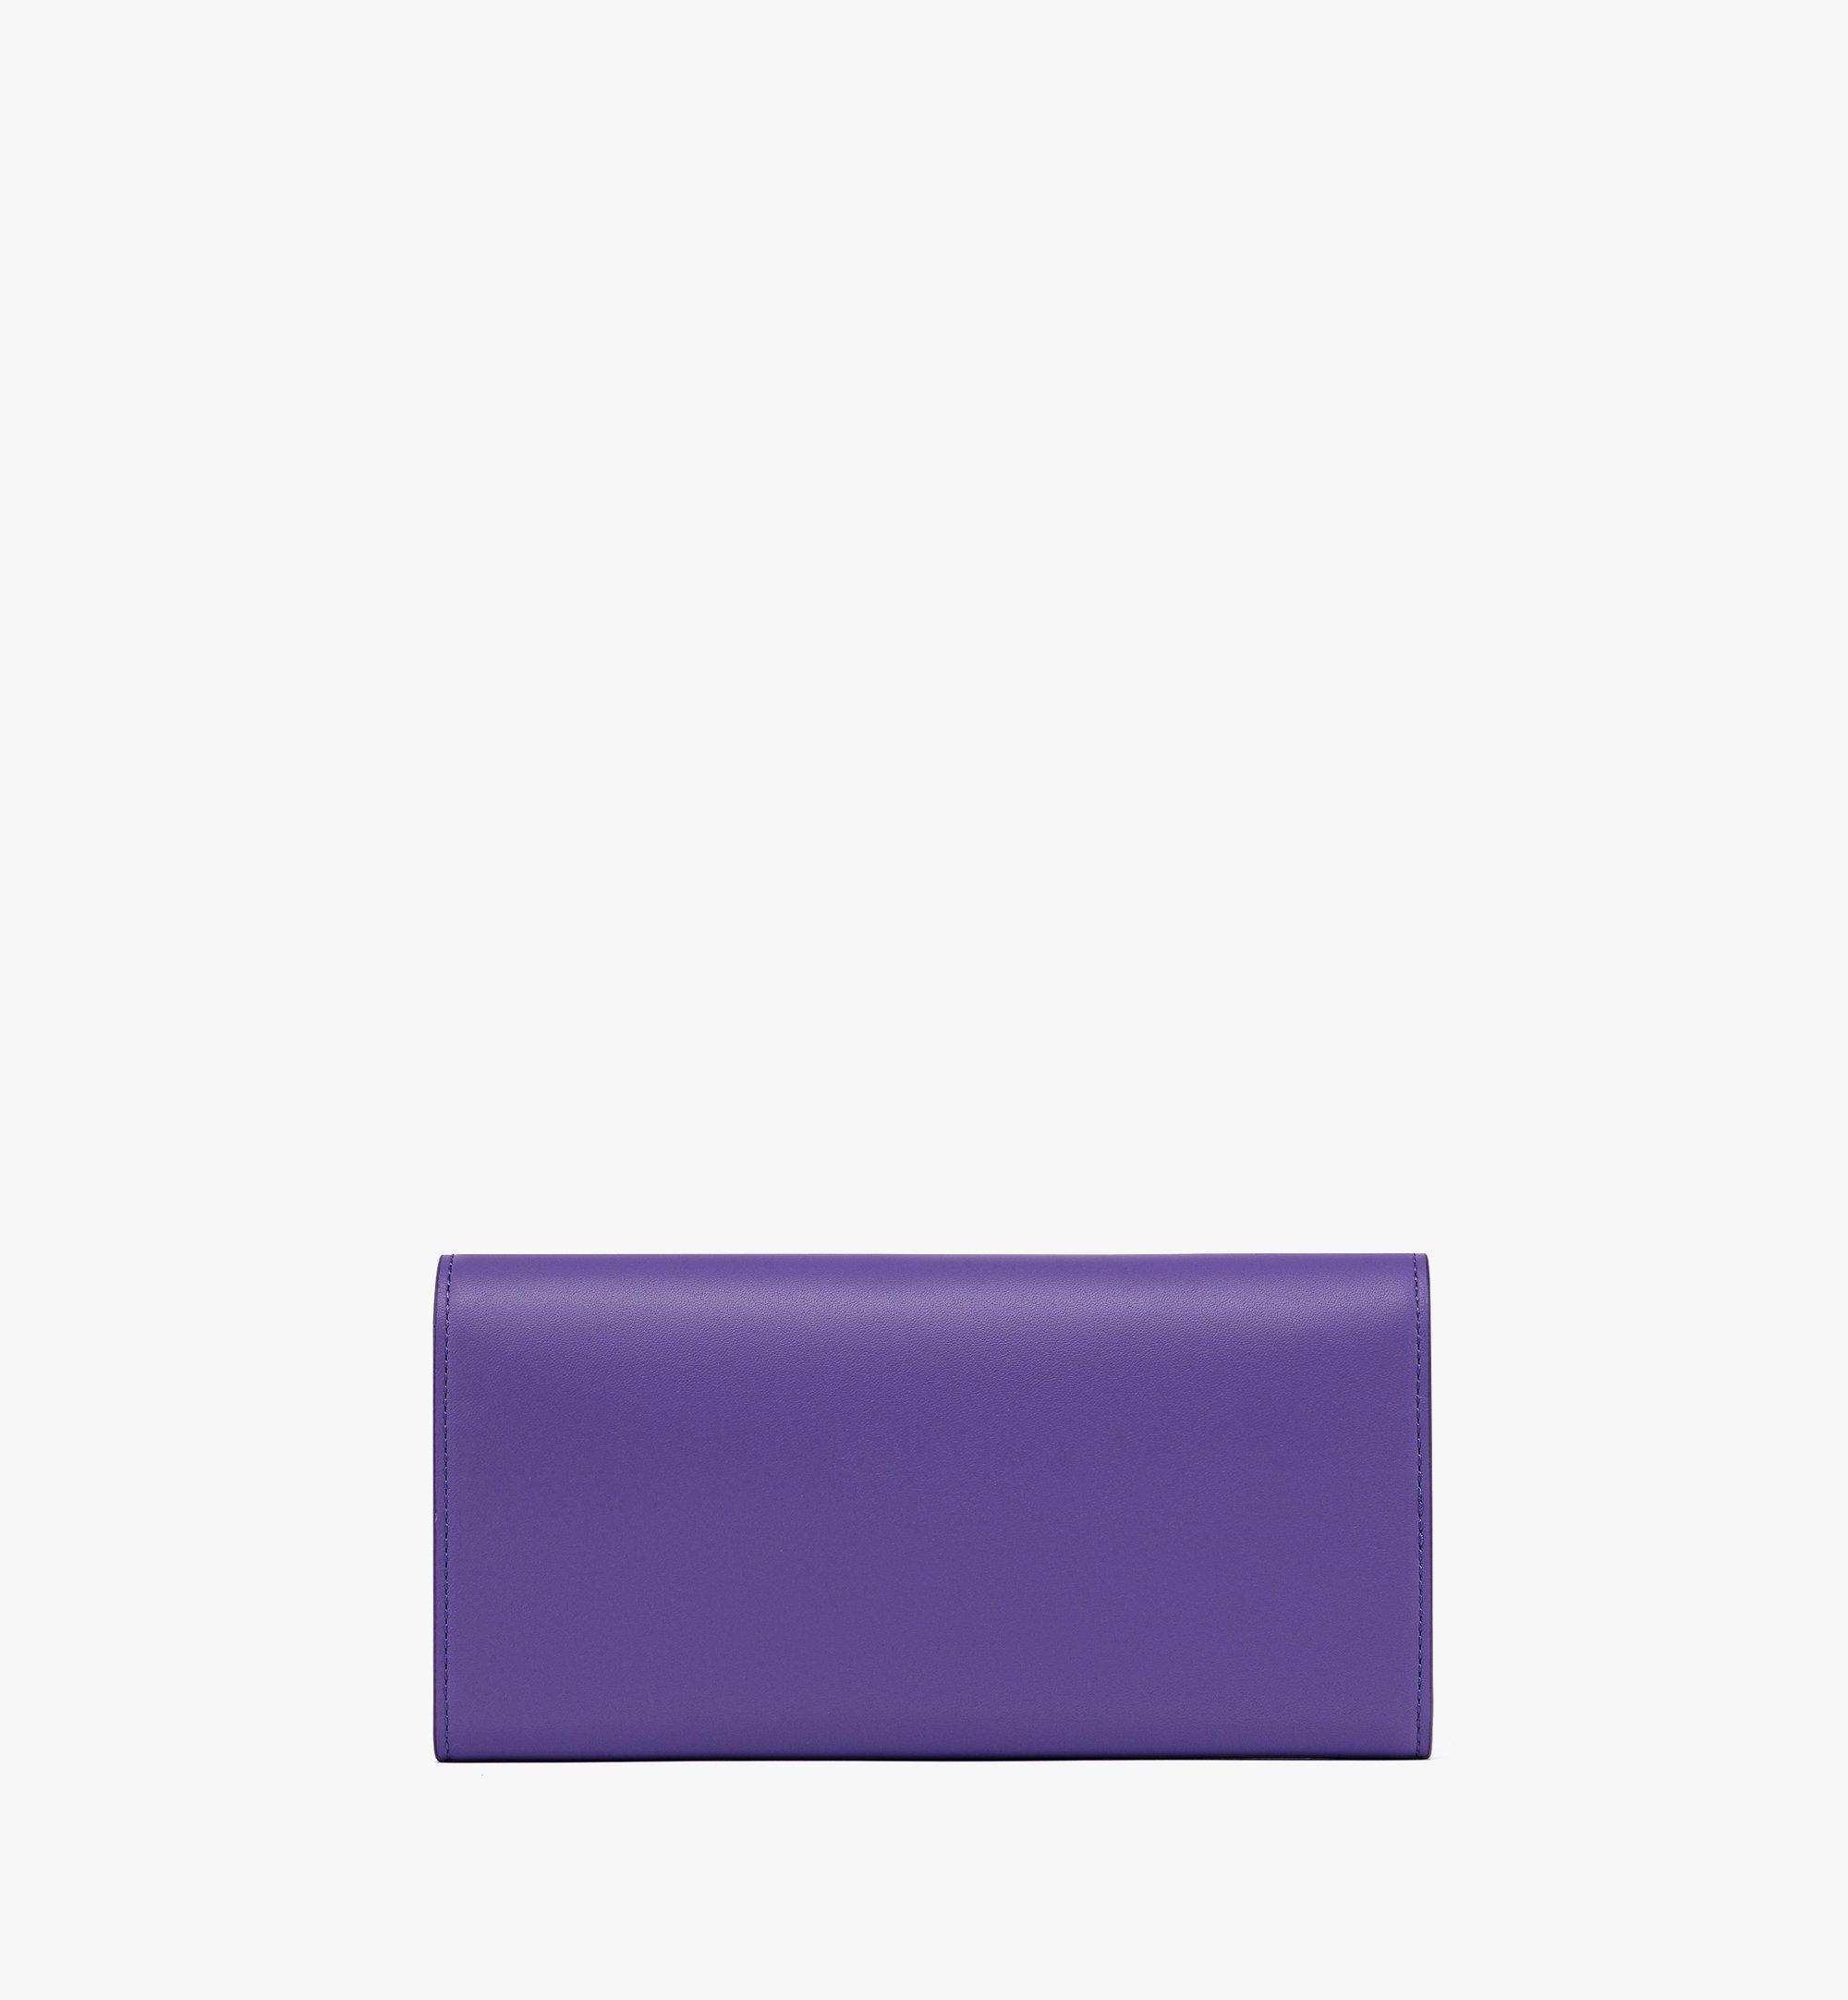 MCM Aren Continental Wallet in Spanish Calf Leather Purple MYLDATA03UQ001 Alternate View 2